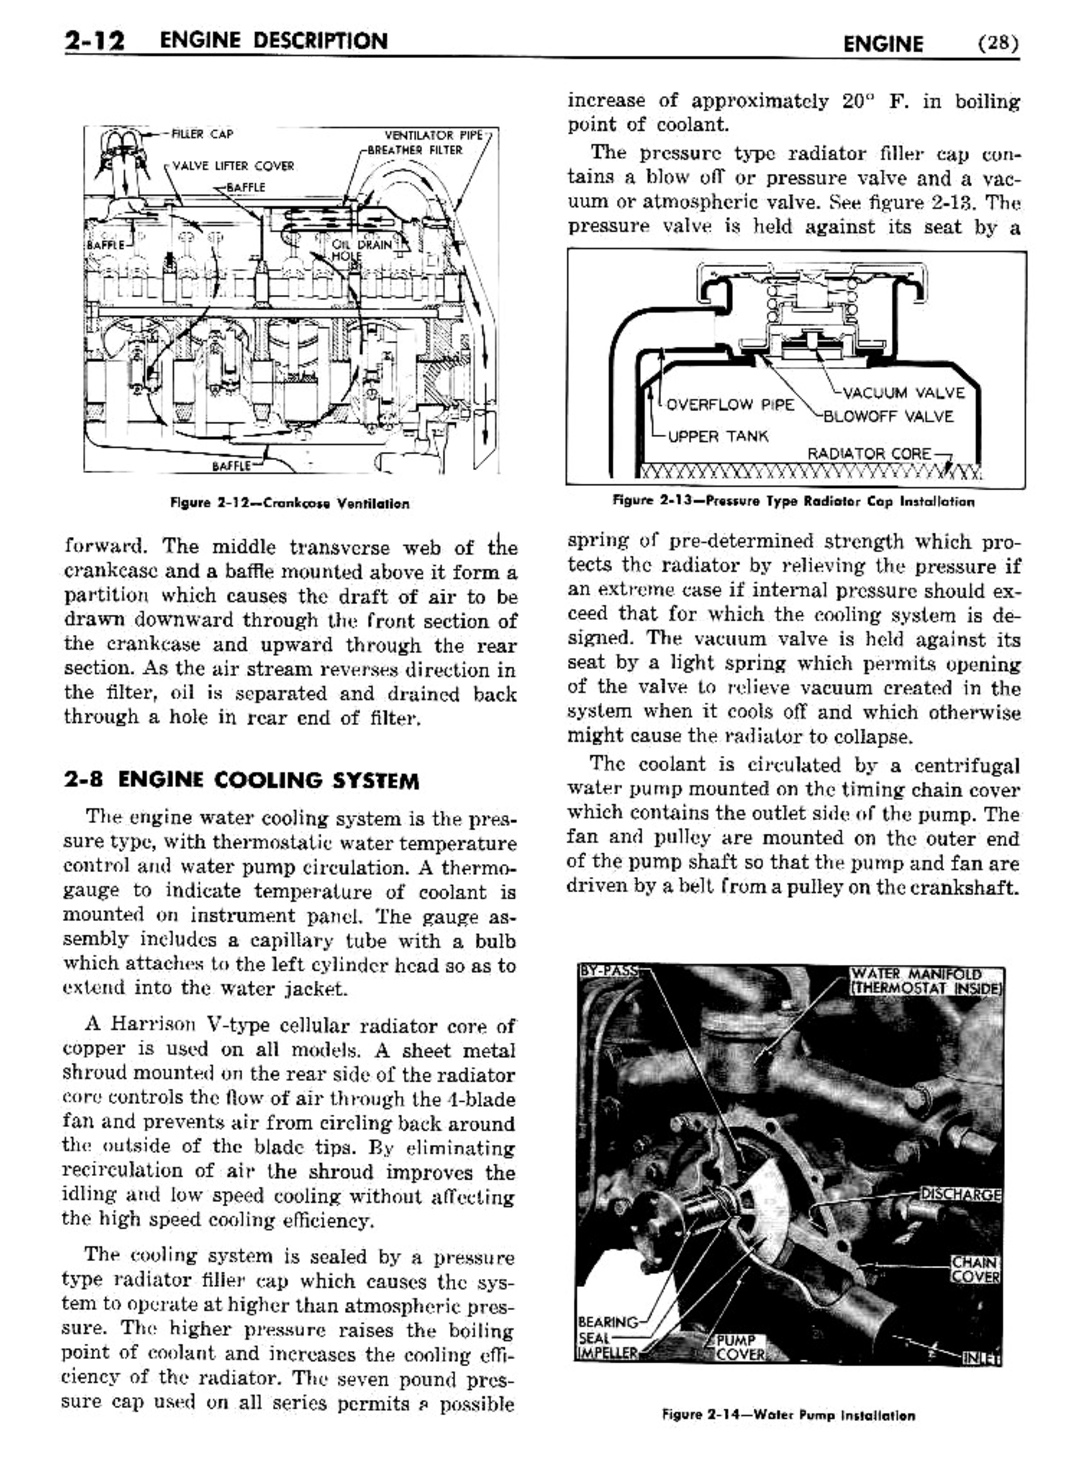 n_03 1954 Buick Shop Manual - Engine-012-012.jpg